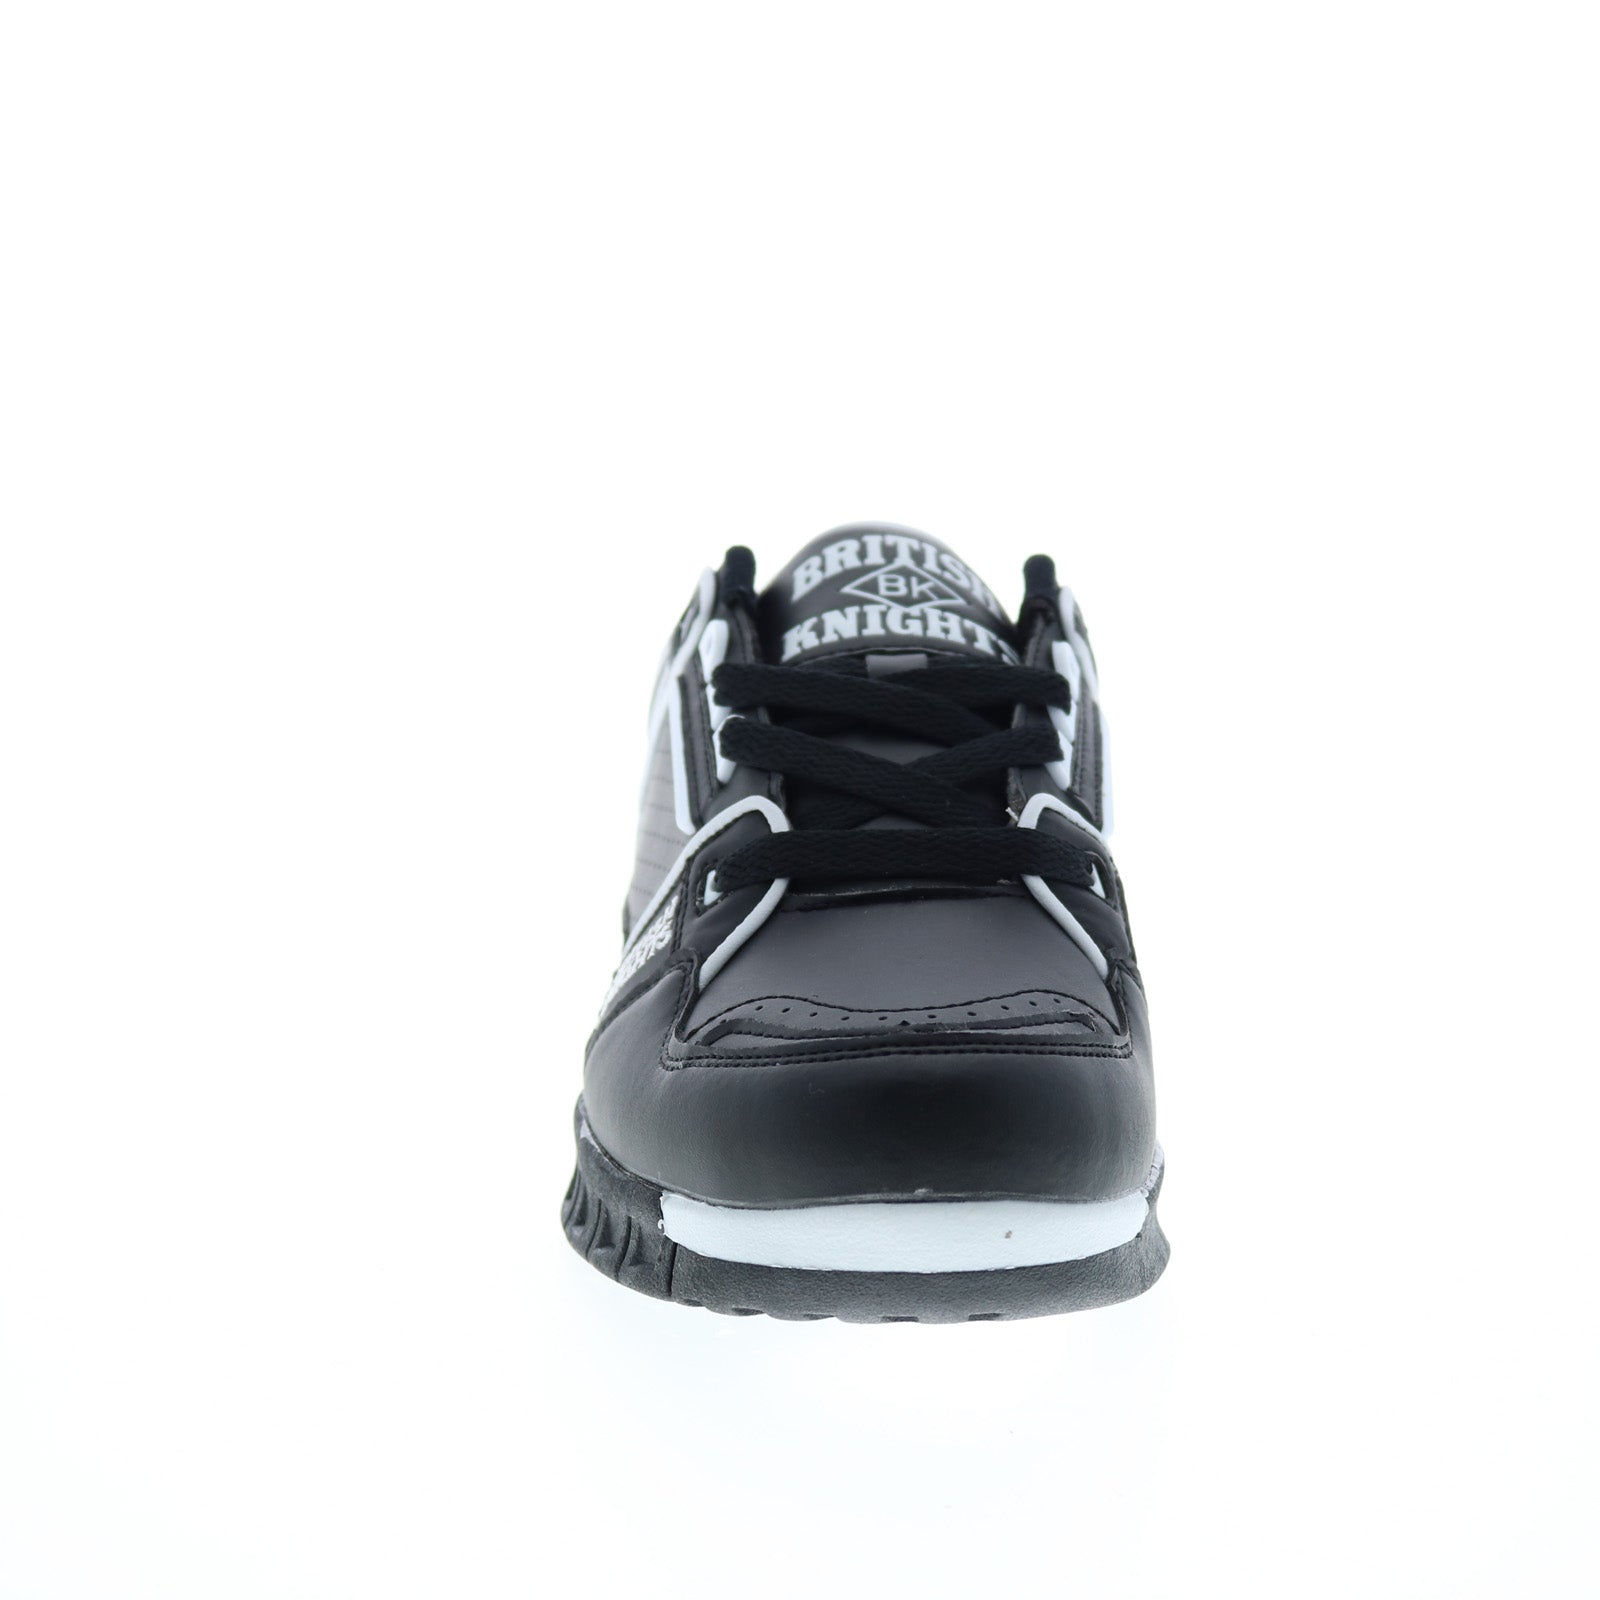 Bijproduct passen vergeten British Knights Astra BMASTRAV-060 Mens Black Lifestyle Sneakers Shoes -  Ruze Shoes